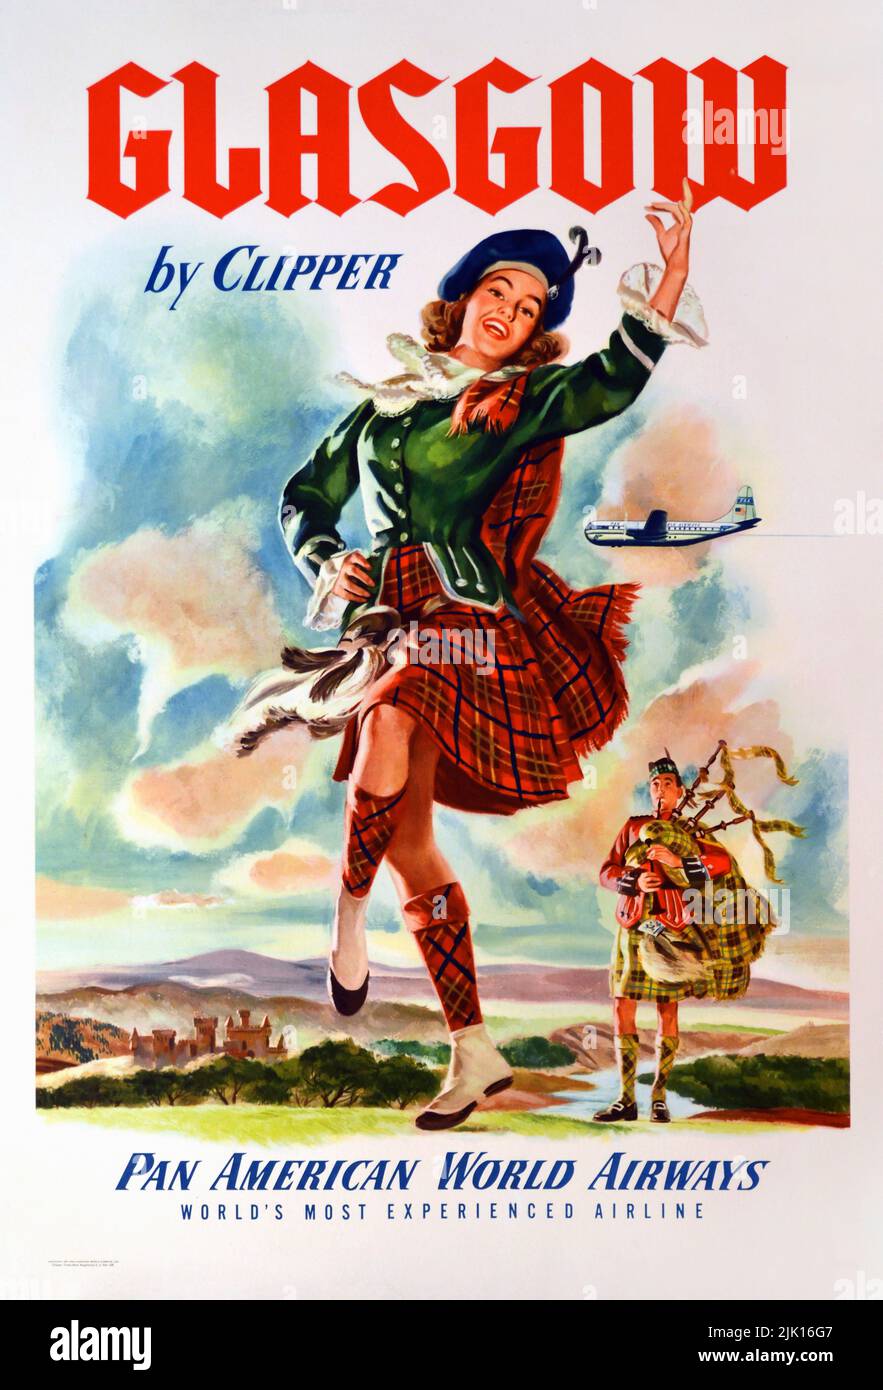 Vintage 1950s Airline Poster- Glasgow by Clipper (Scottish Highland Dancer in Kilt) Stock Photo